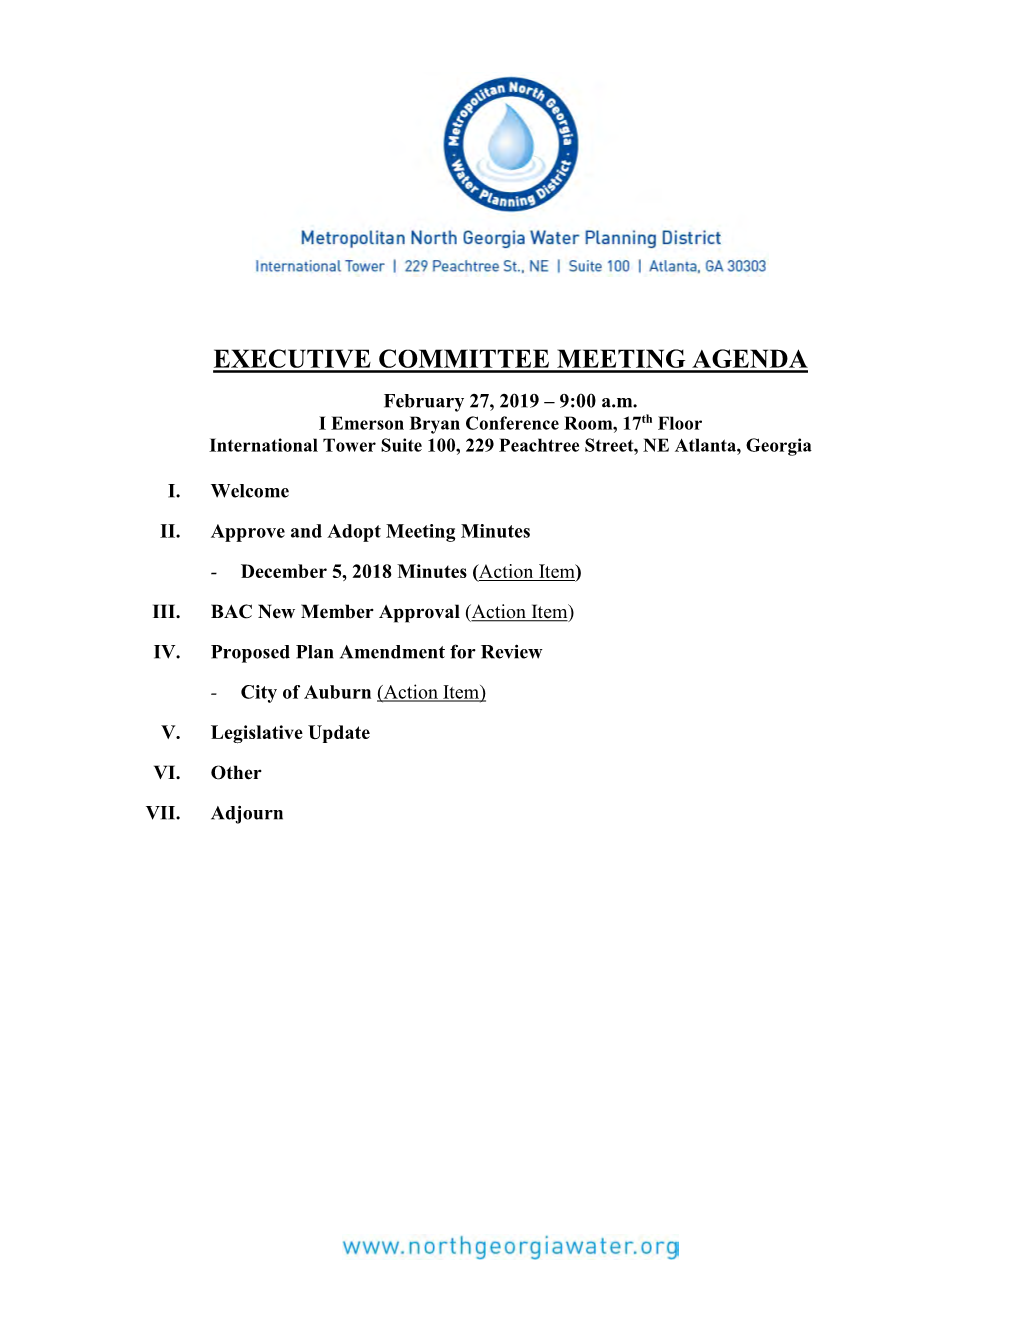 Executive Committee Meeting Agenda